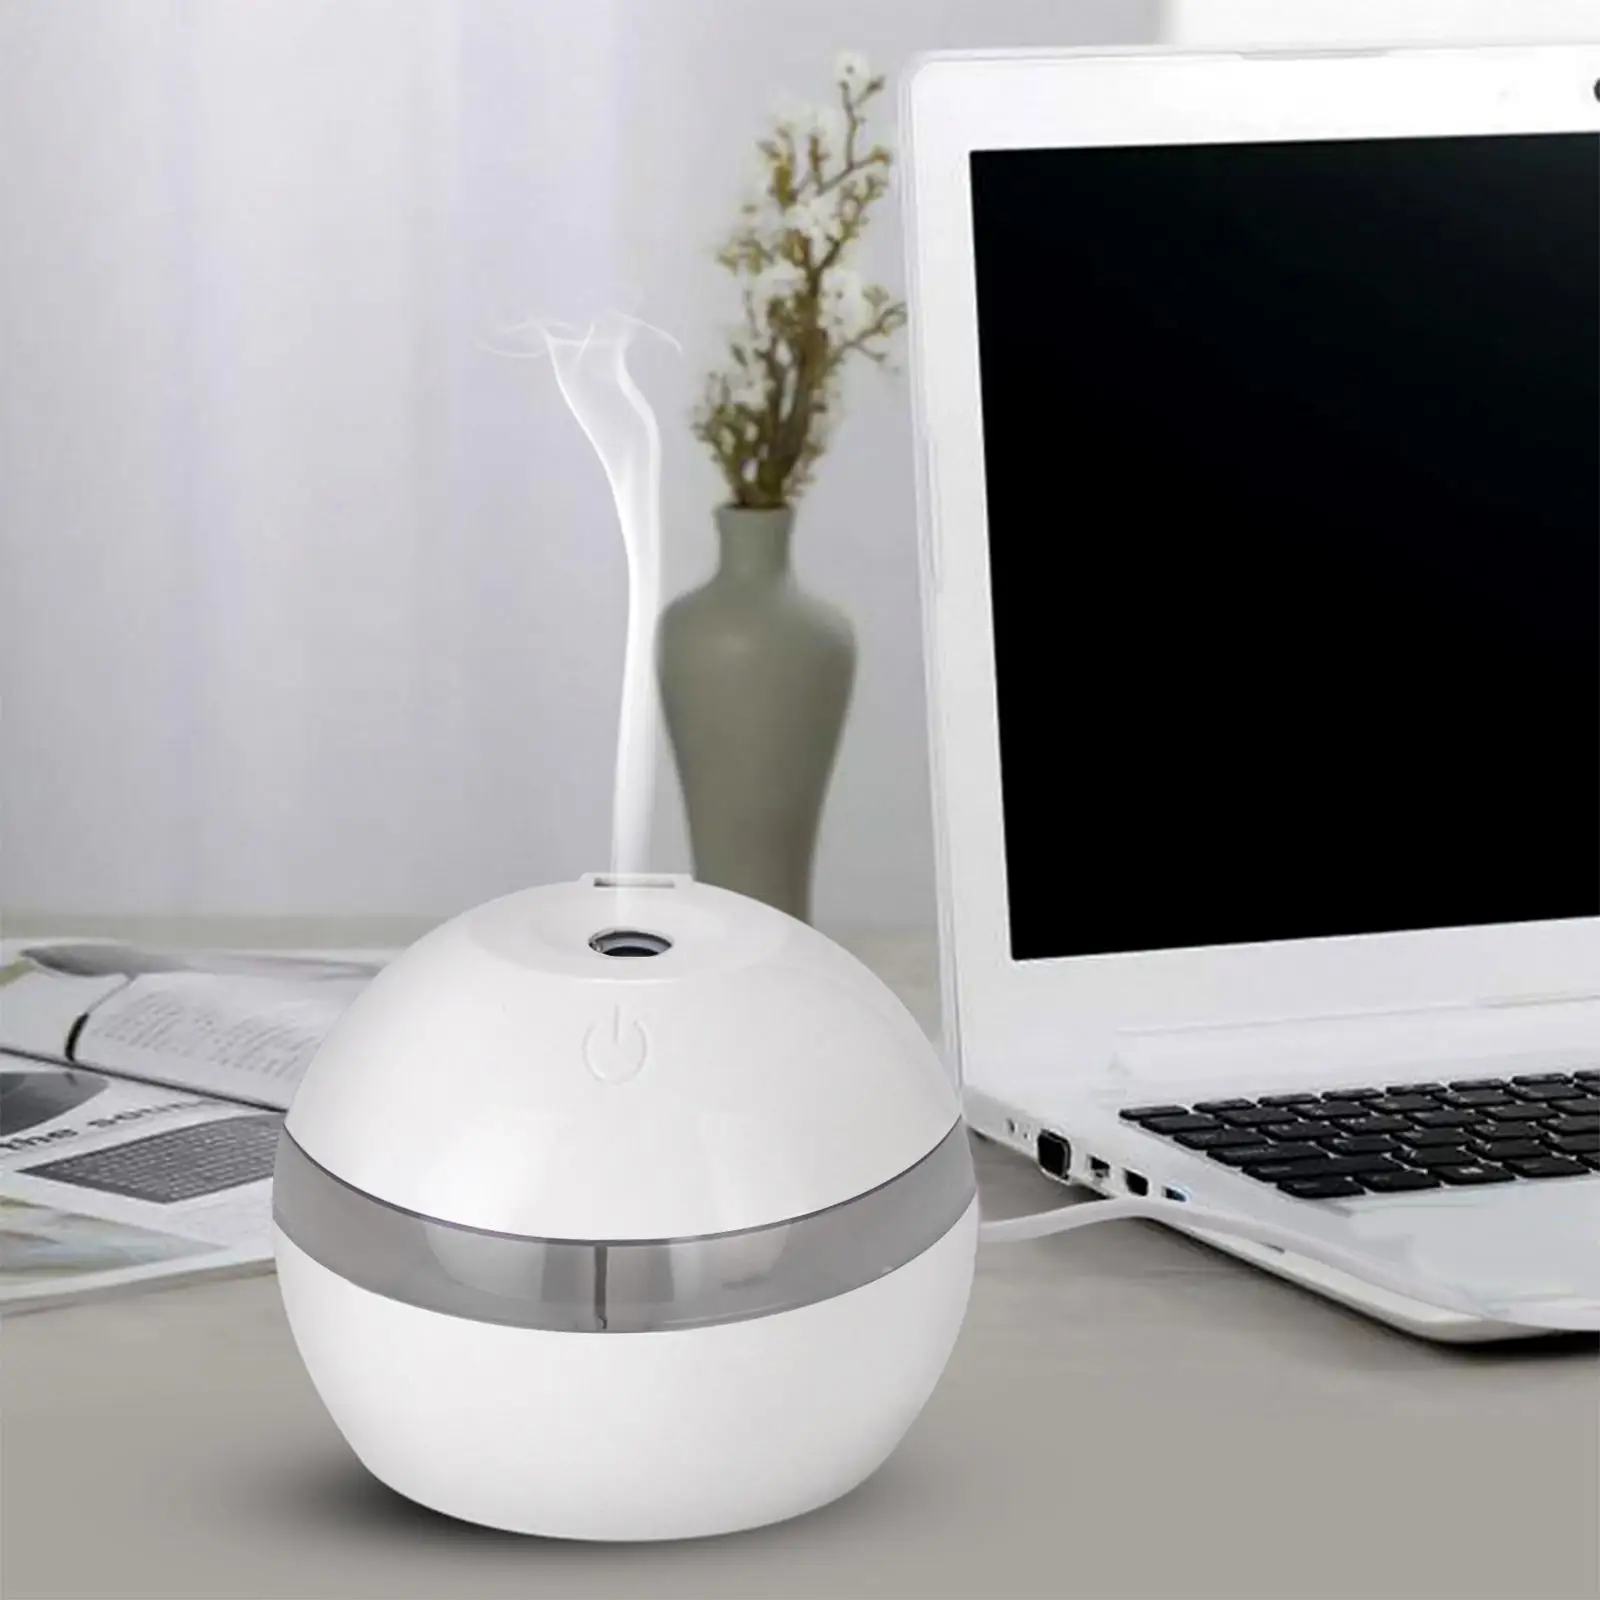 Humidifier W USB Fan Spheric W Night Light Device Desktop Multifunctional Three-In-One USB Power for Car Office Home Travel